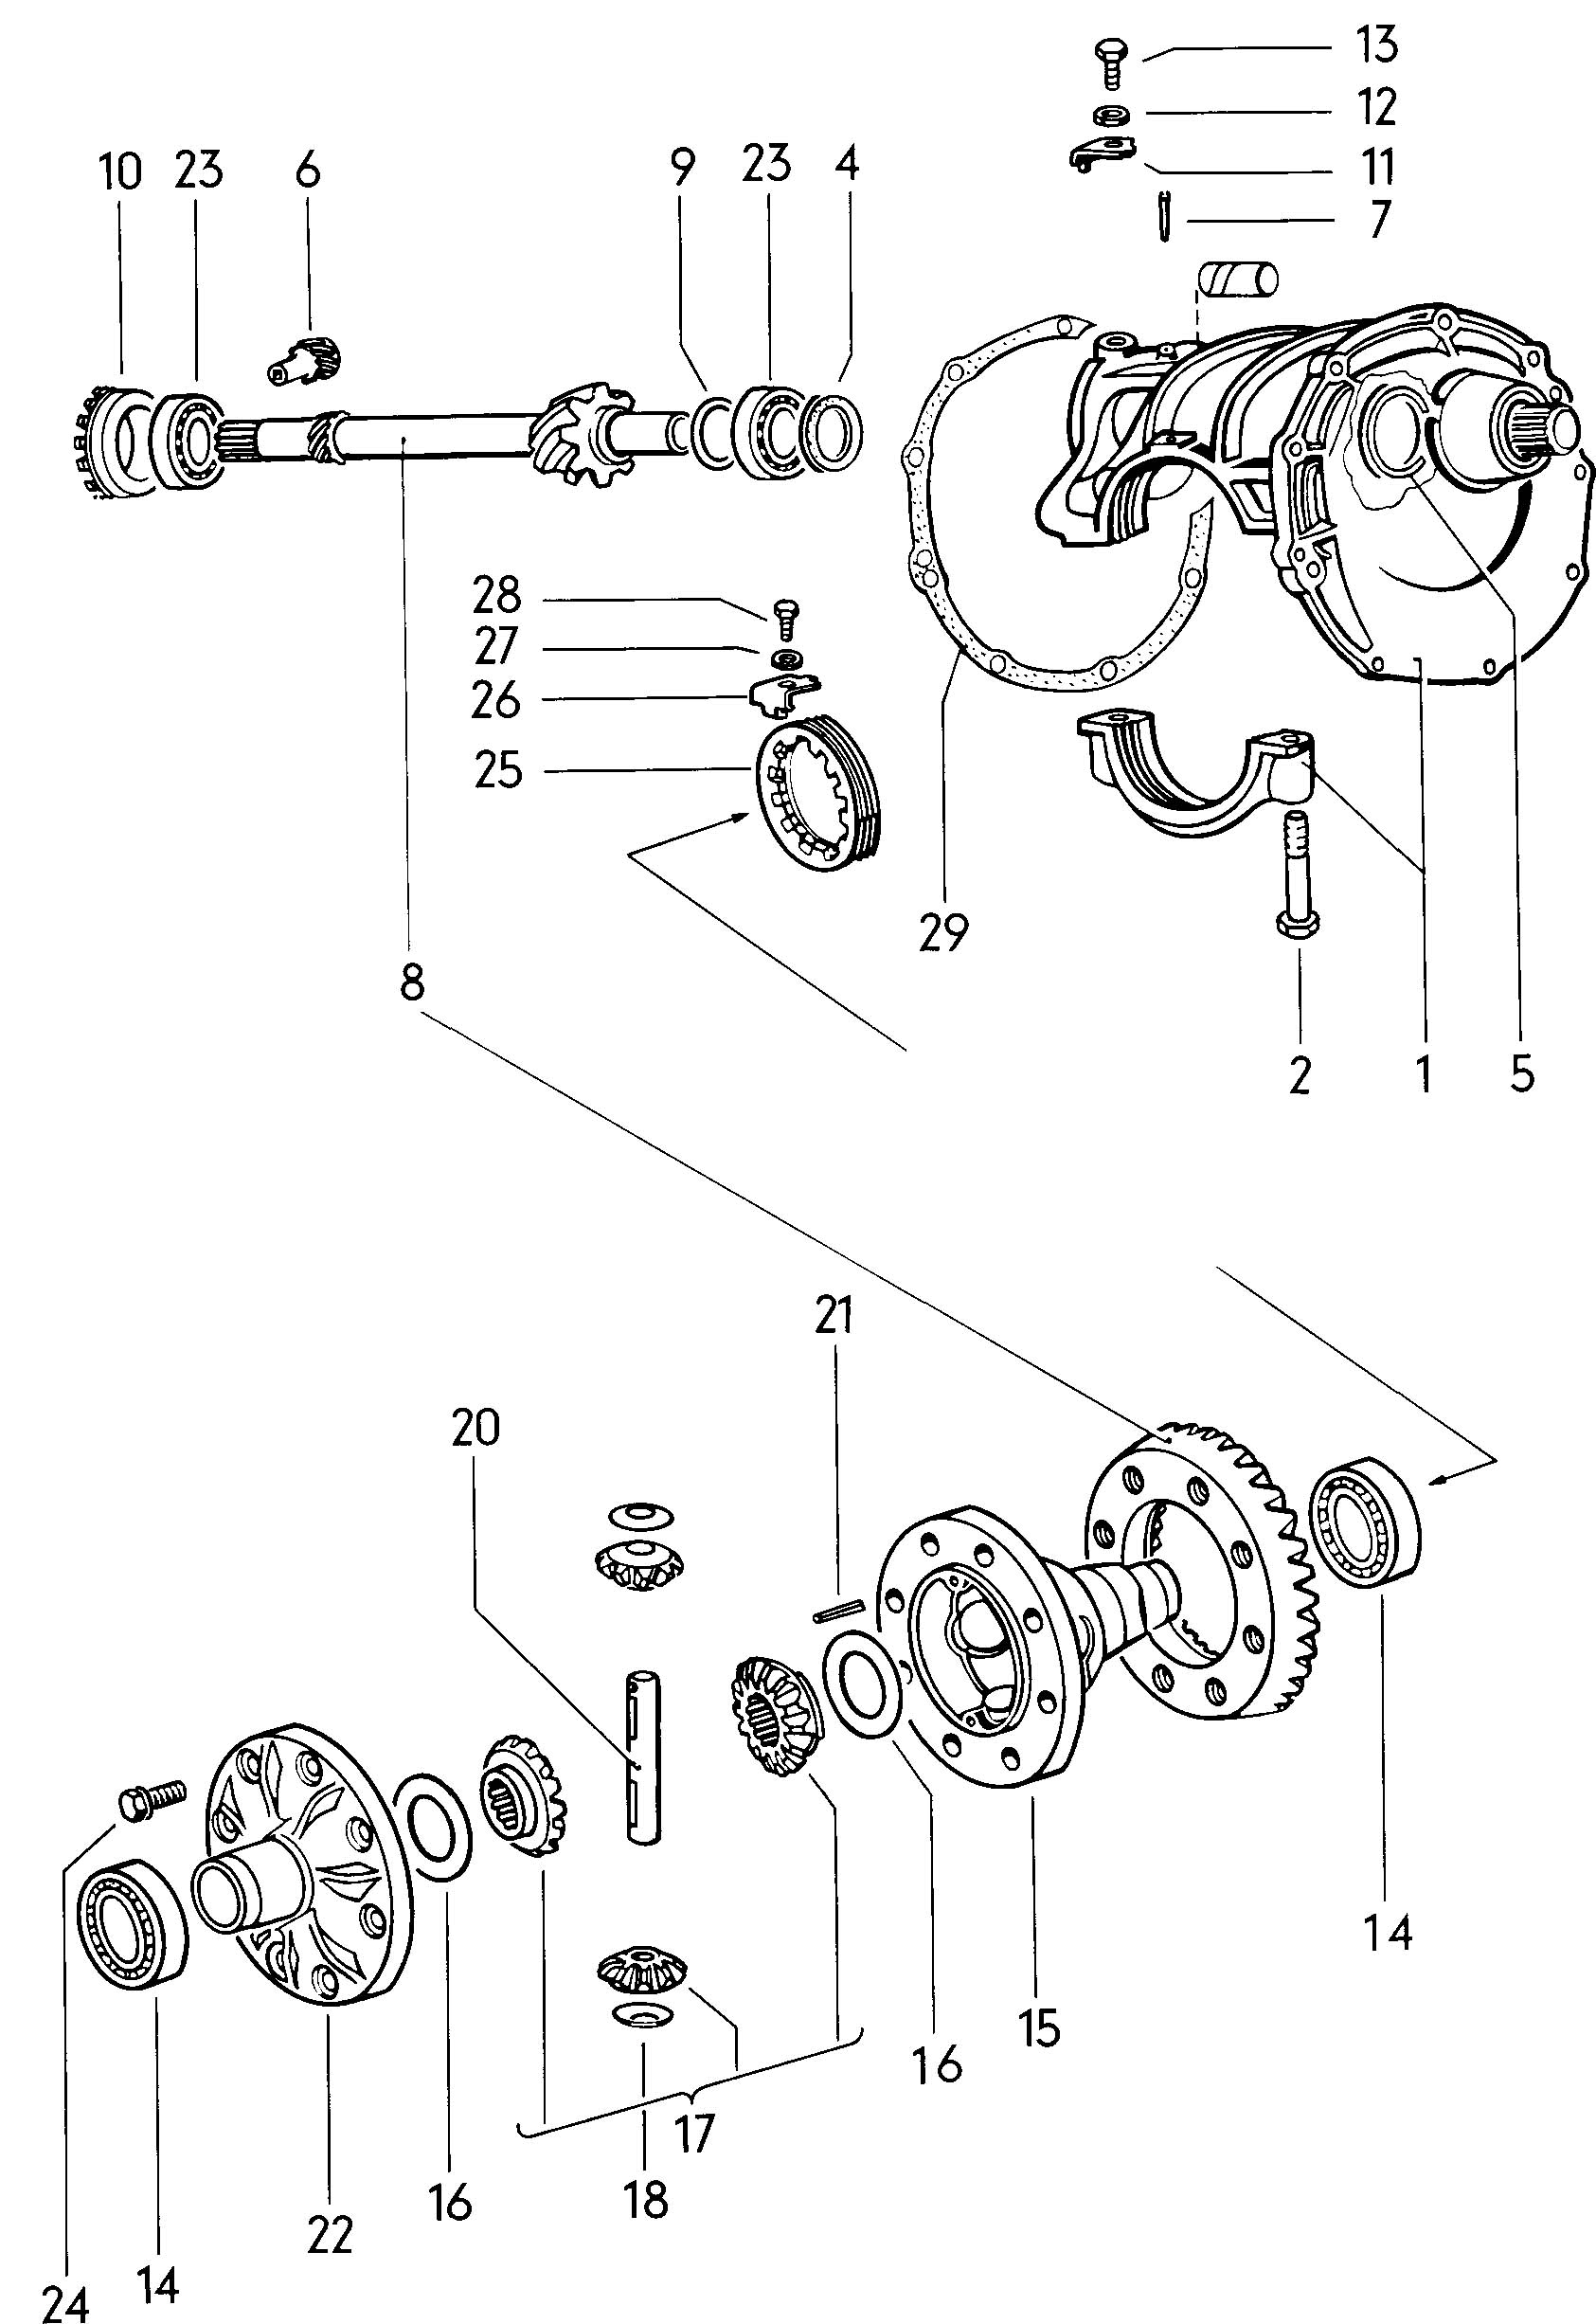 m16a2 parts diagram